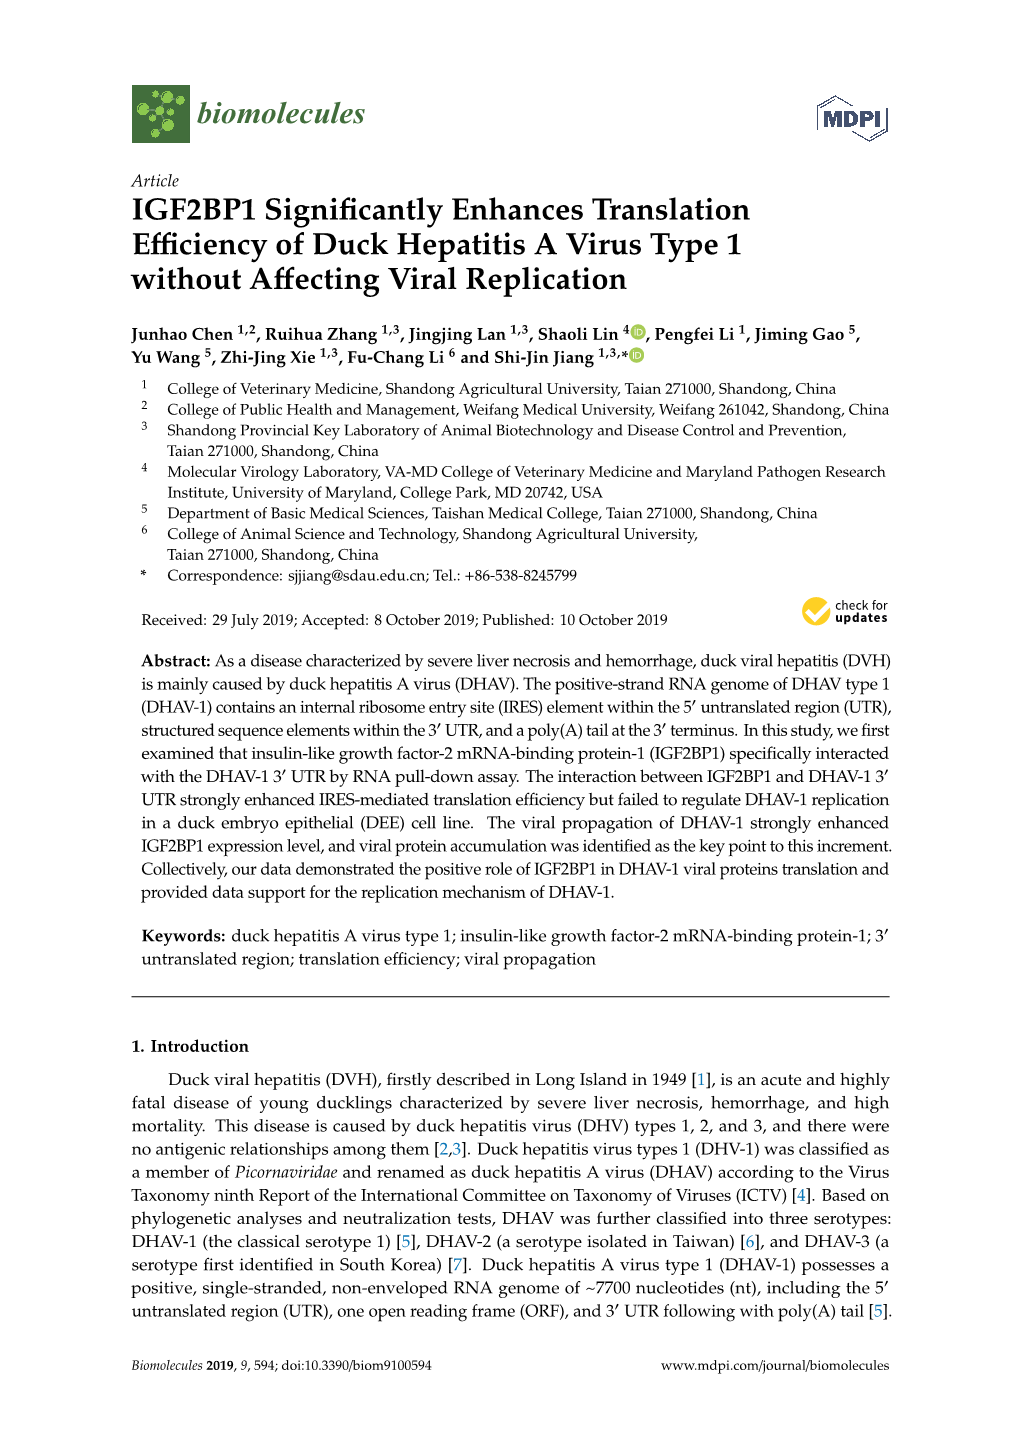 IGF2BP1 Significantly Enhances Translation Efficiency of Duck